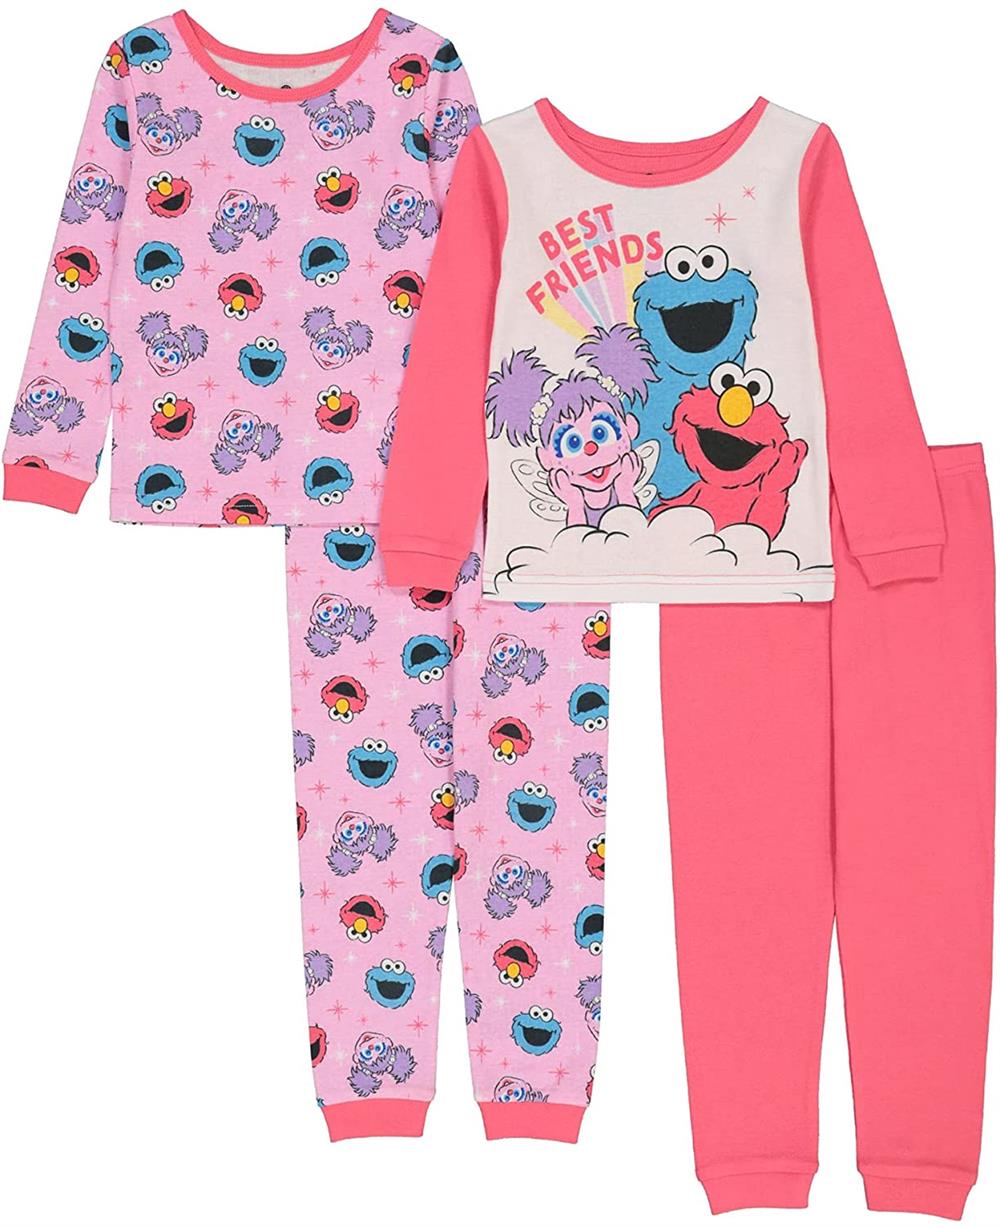 Sesame Street Girls 2T-4T 4-Piece Cotton Pajama Set